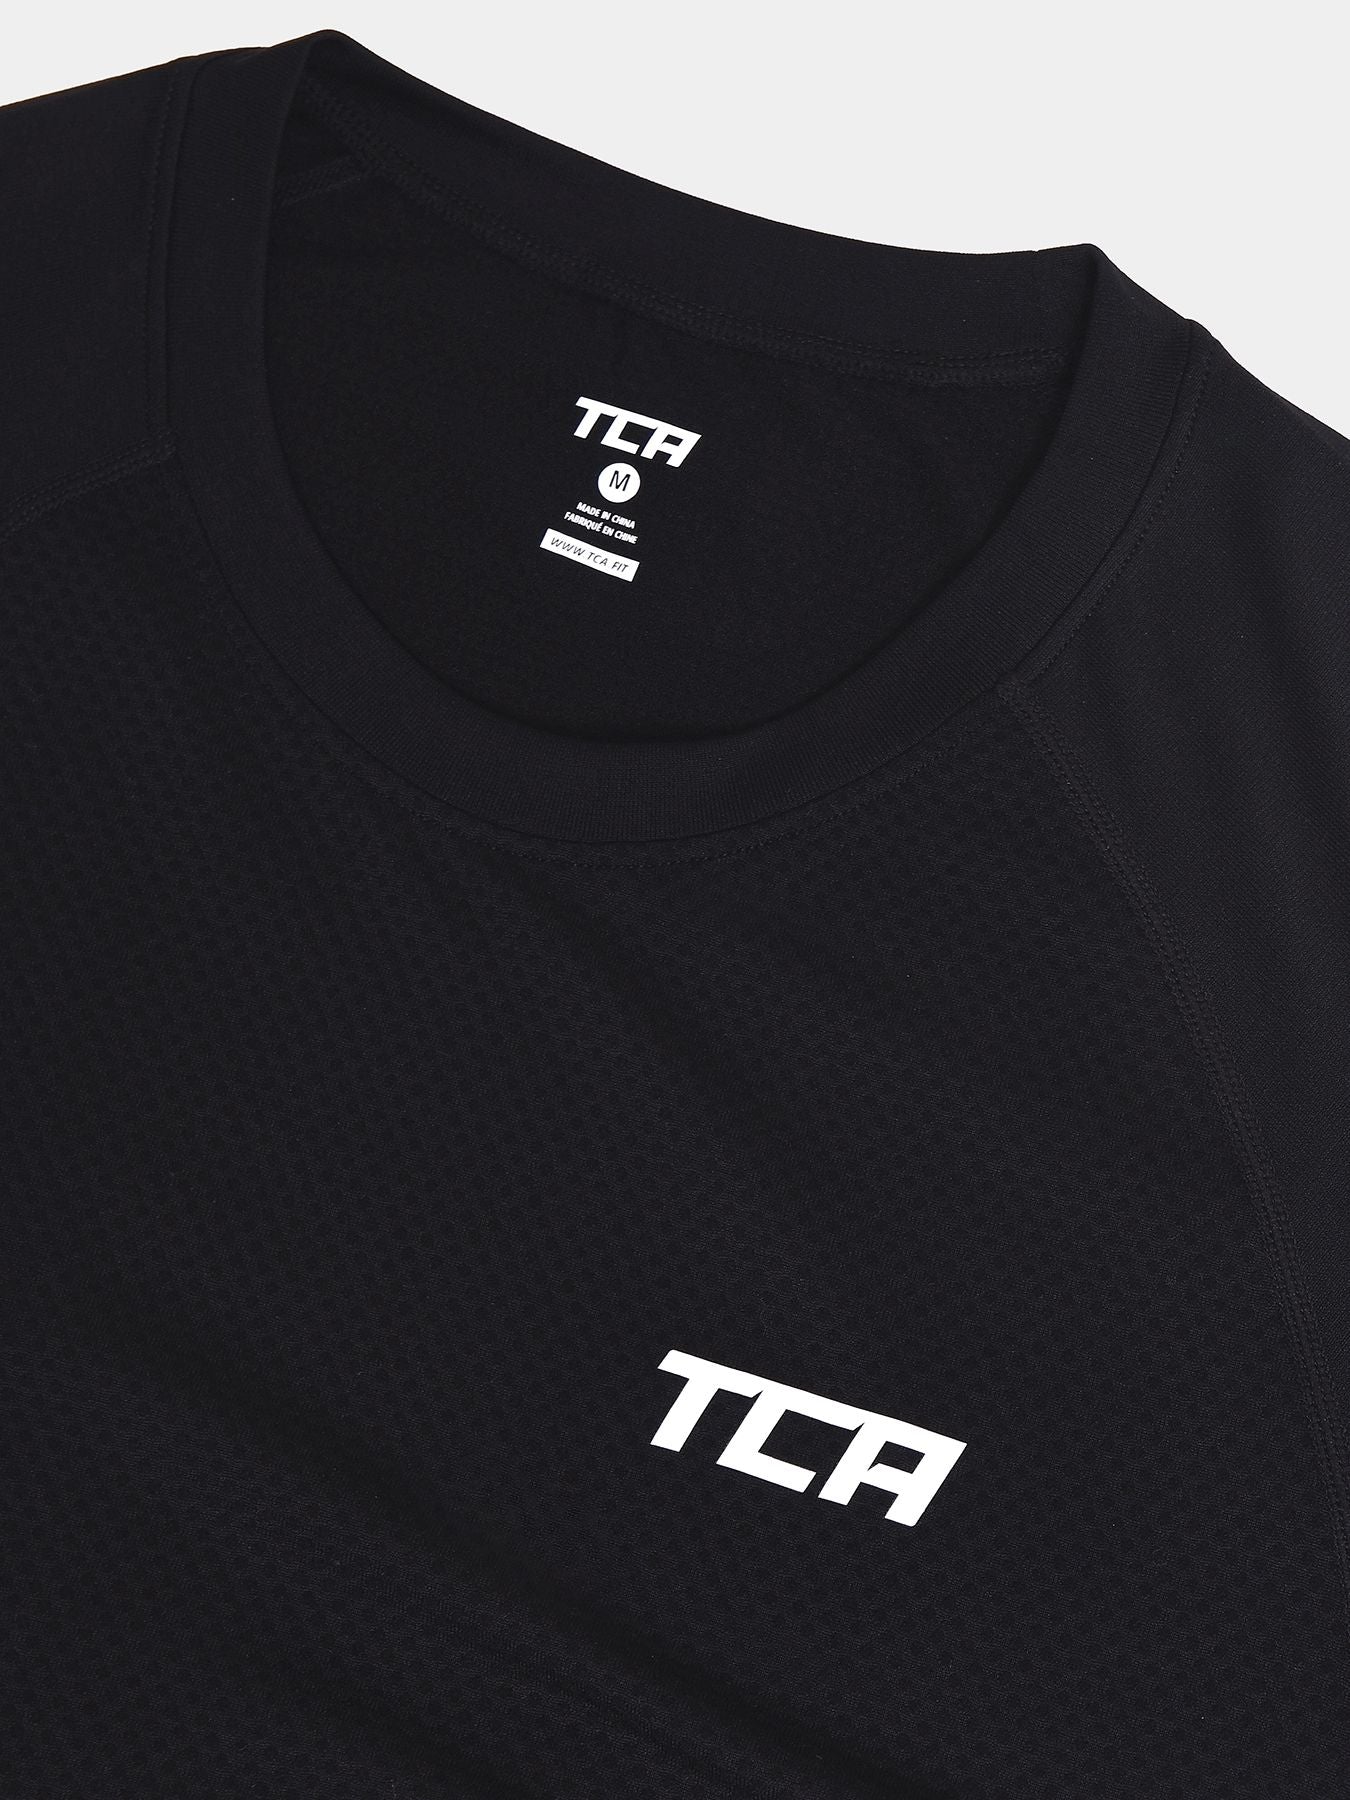 SuperKnit Engineered 2.0 Short Sleeve T-Shirt For Men